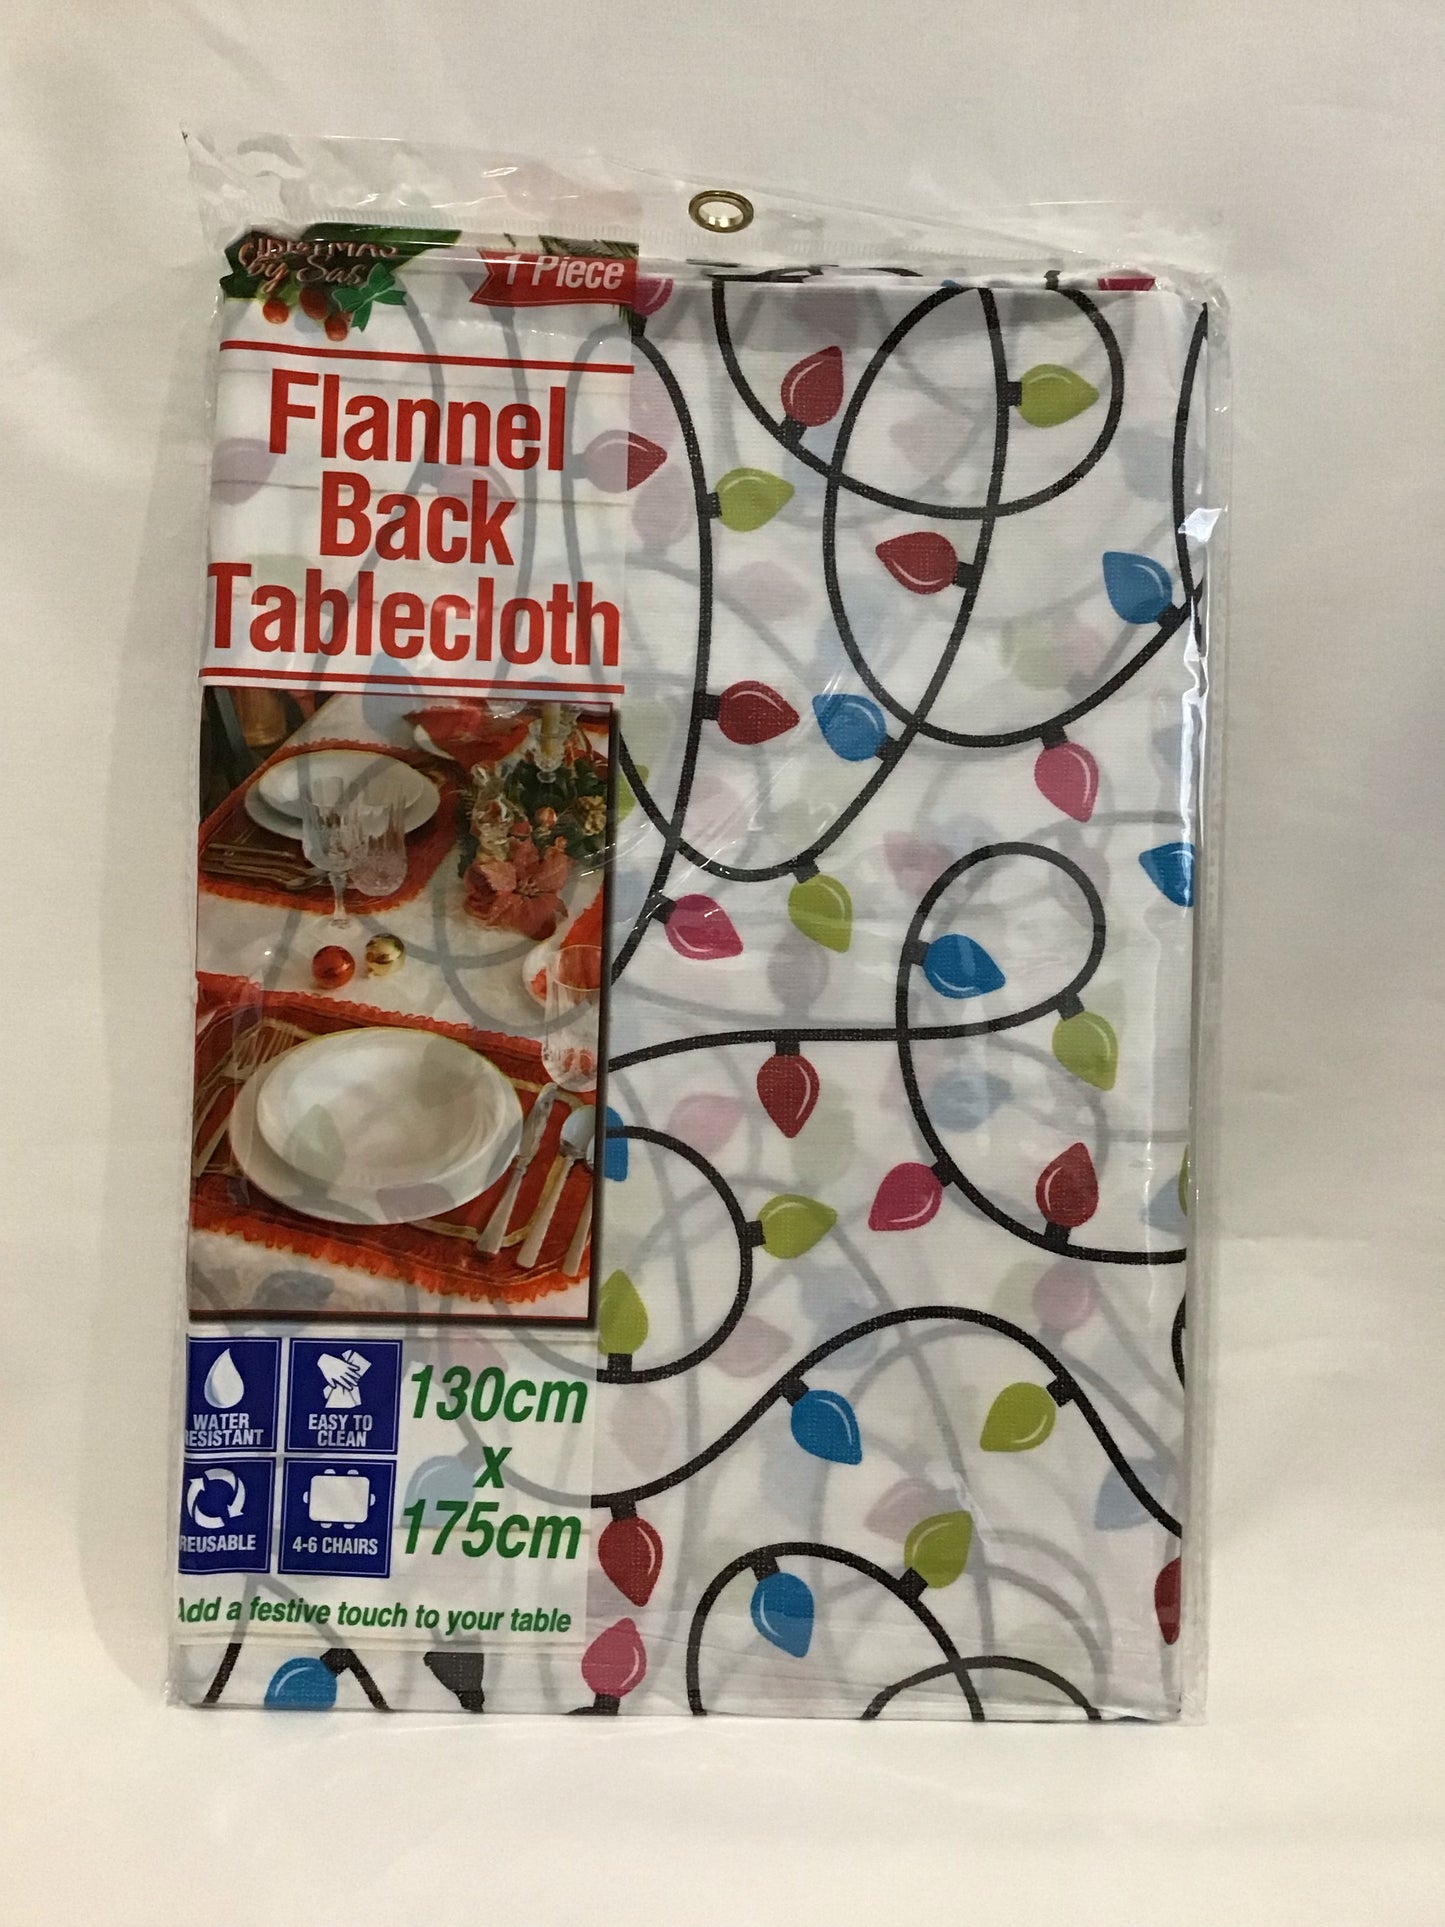 Christmas Flannel Back Table Cloth - 130cm x 175cm - Christmas Lights